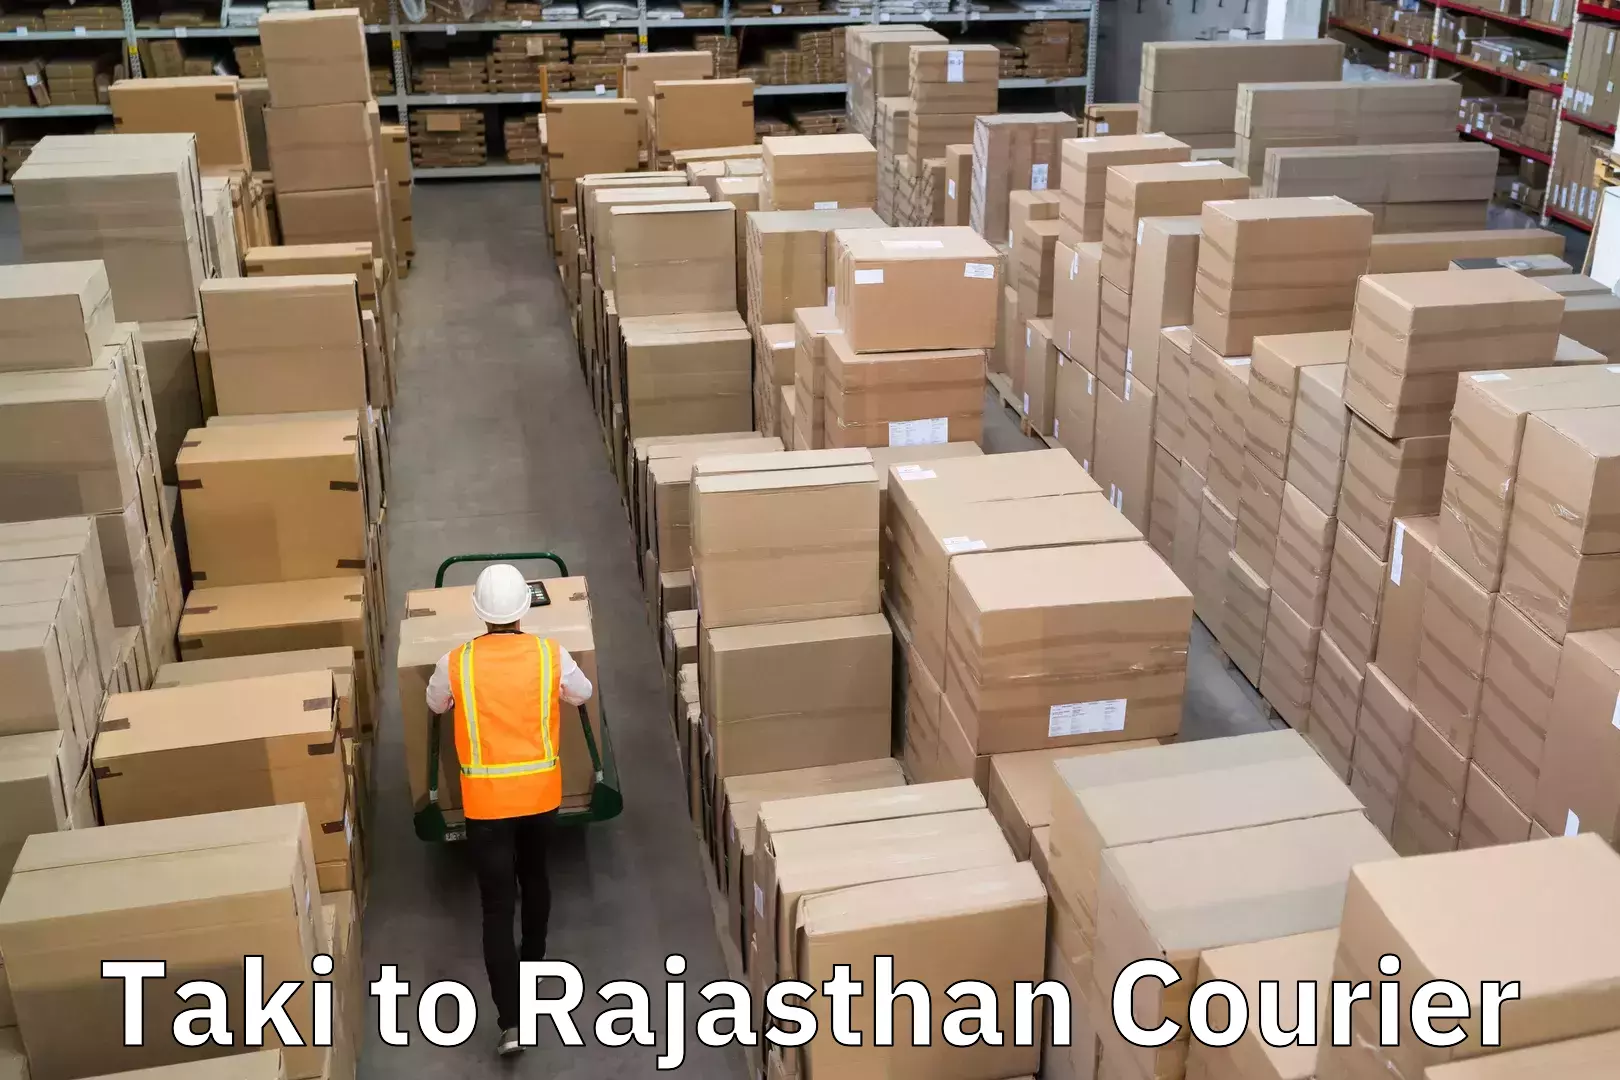 Digital courier platforms Taki to Rajasthan